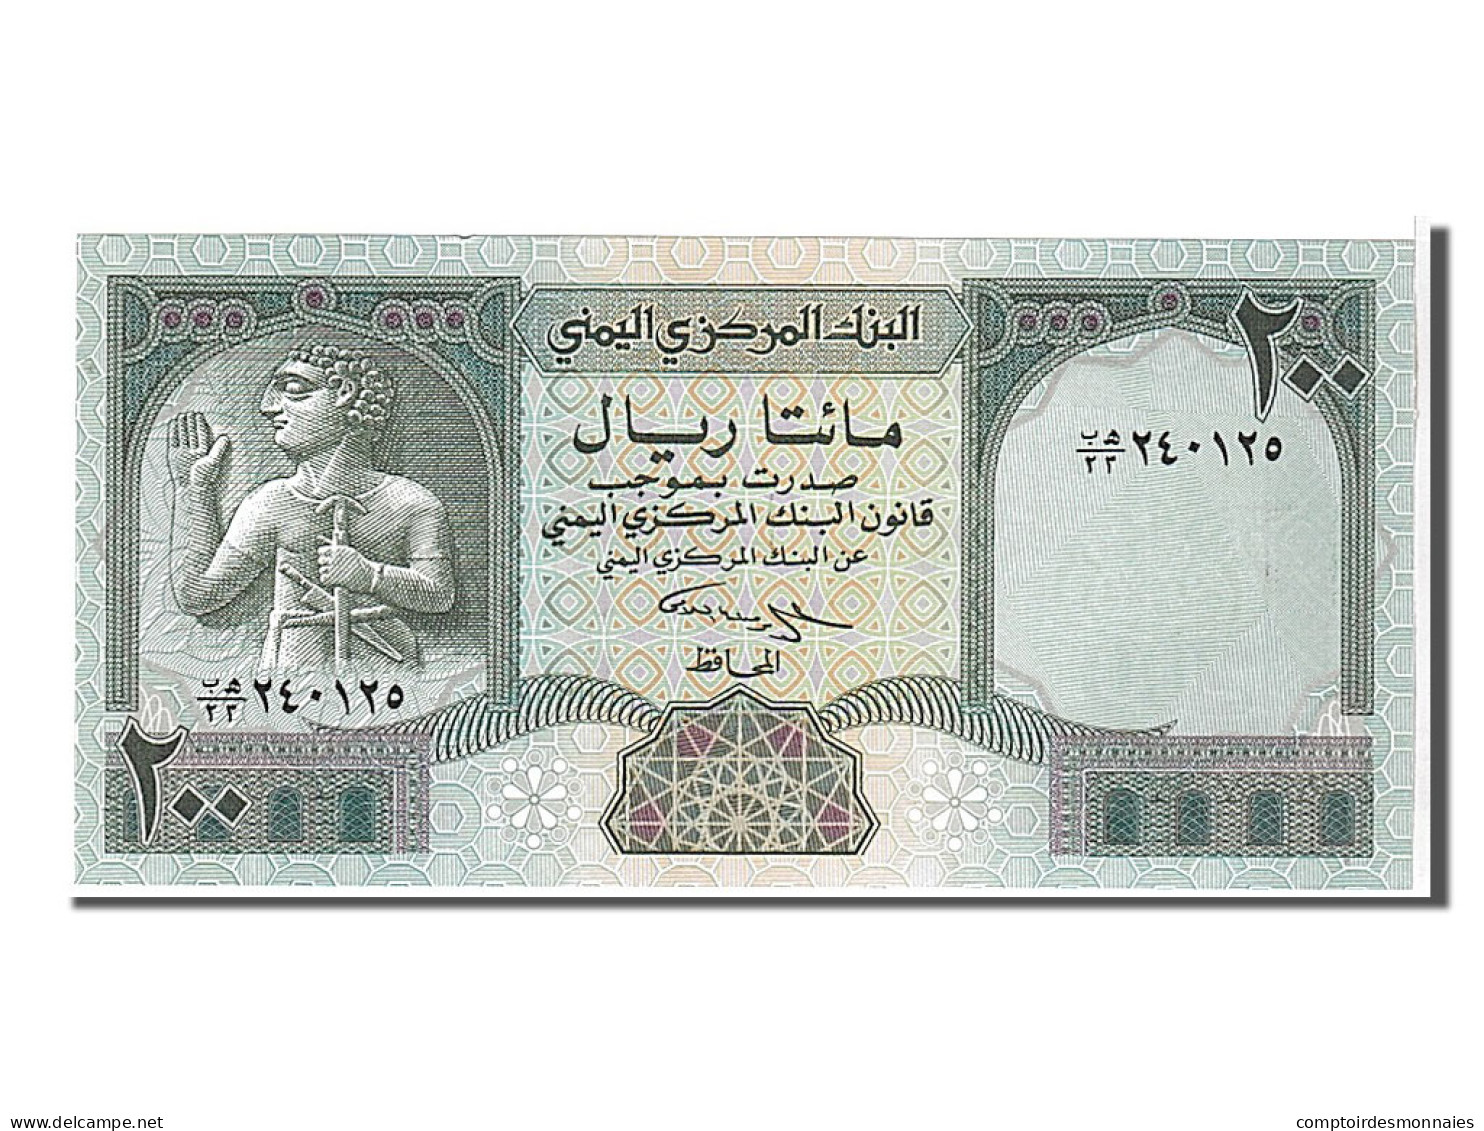 Billet, Yemen Arab Republic, 200 Rials, 1996, NEUF - Jemen